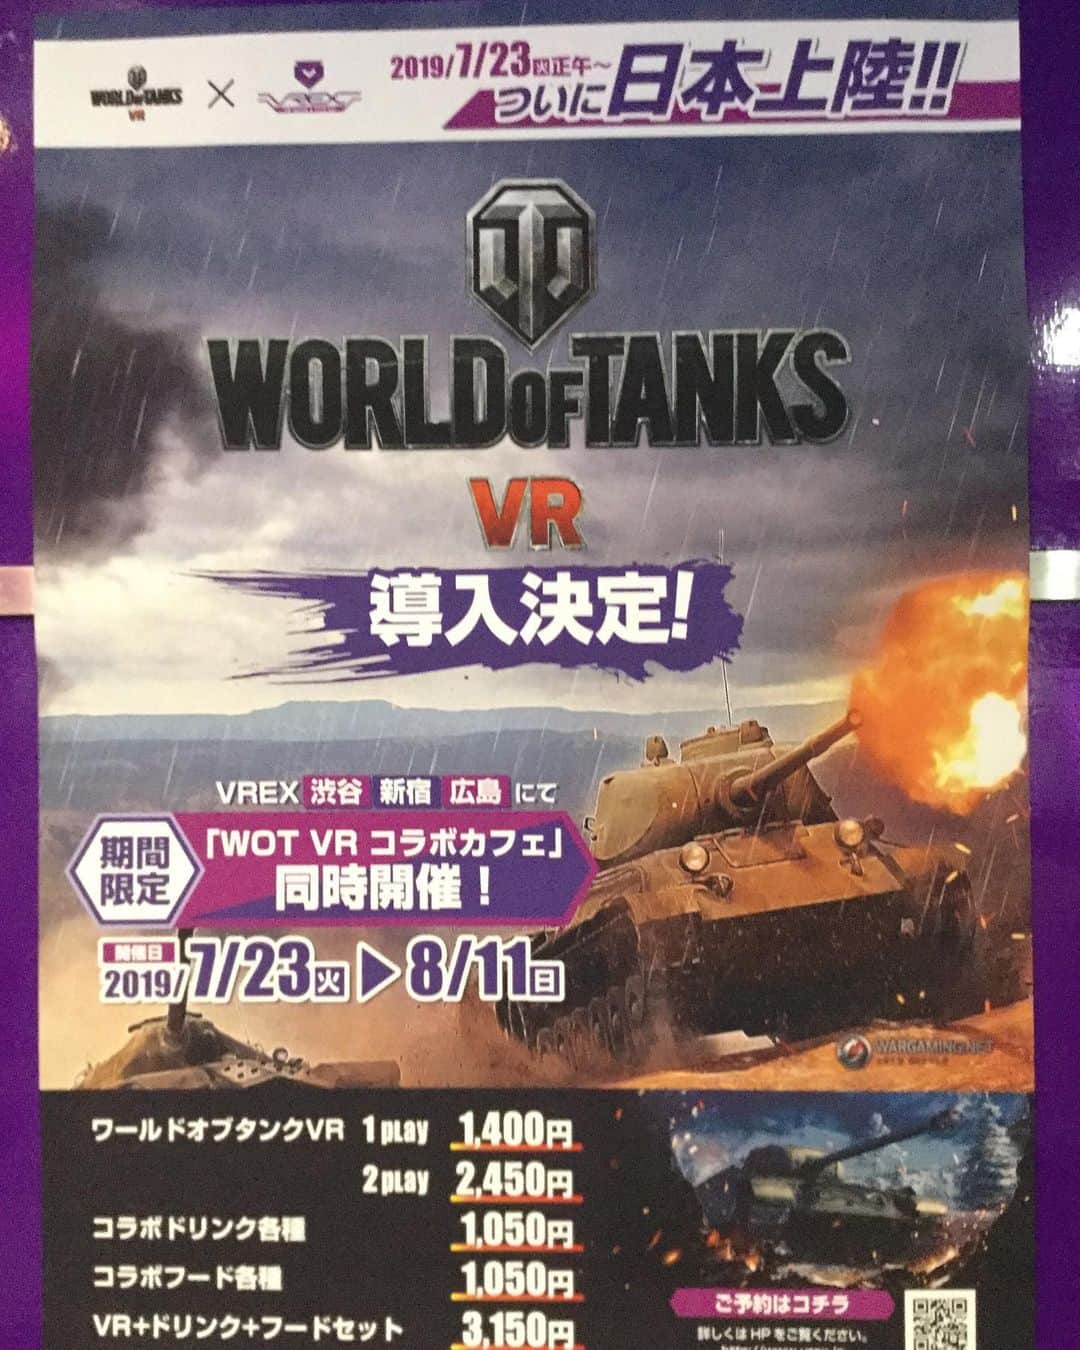 VREX VR Game&Cafe Barのインスタグラム：「こんばんは！VREX新宿店です。 あの、世界的に有名なオンラインゲームのワールドオブタンクスとのコラボが、まもなくスタートします！！🇨🇦🇺🇸🇮🇹 コラボ期間は7/23〜8/11です！！ ぜひチェックしてみてください🙇‍♂️🙇‍♀️ #新宿 #VR #ワールドオブタンクス #VREX #新宿歌舞伎町 #西武新宿」